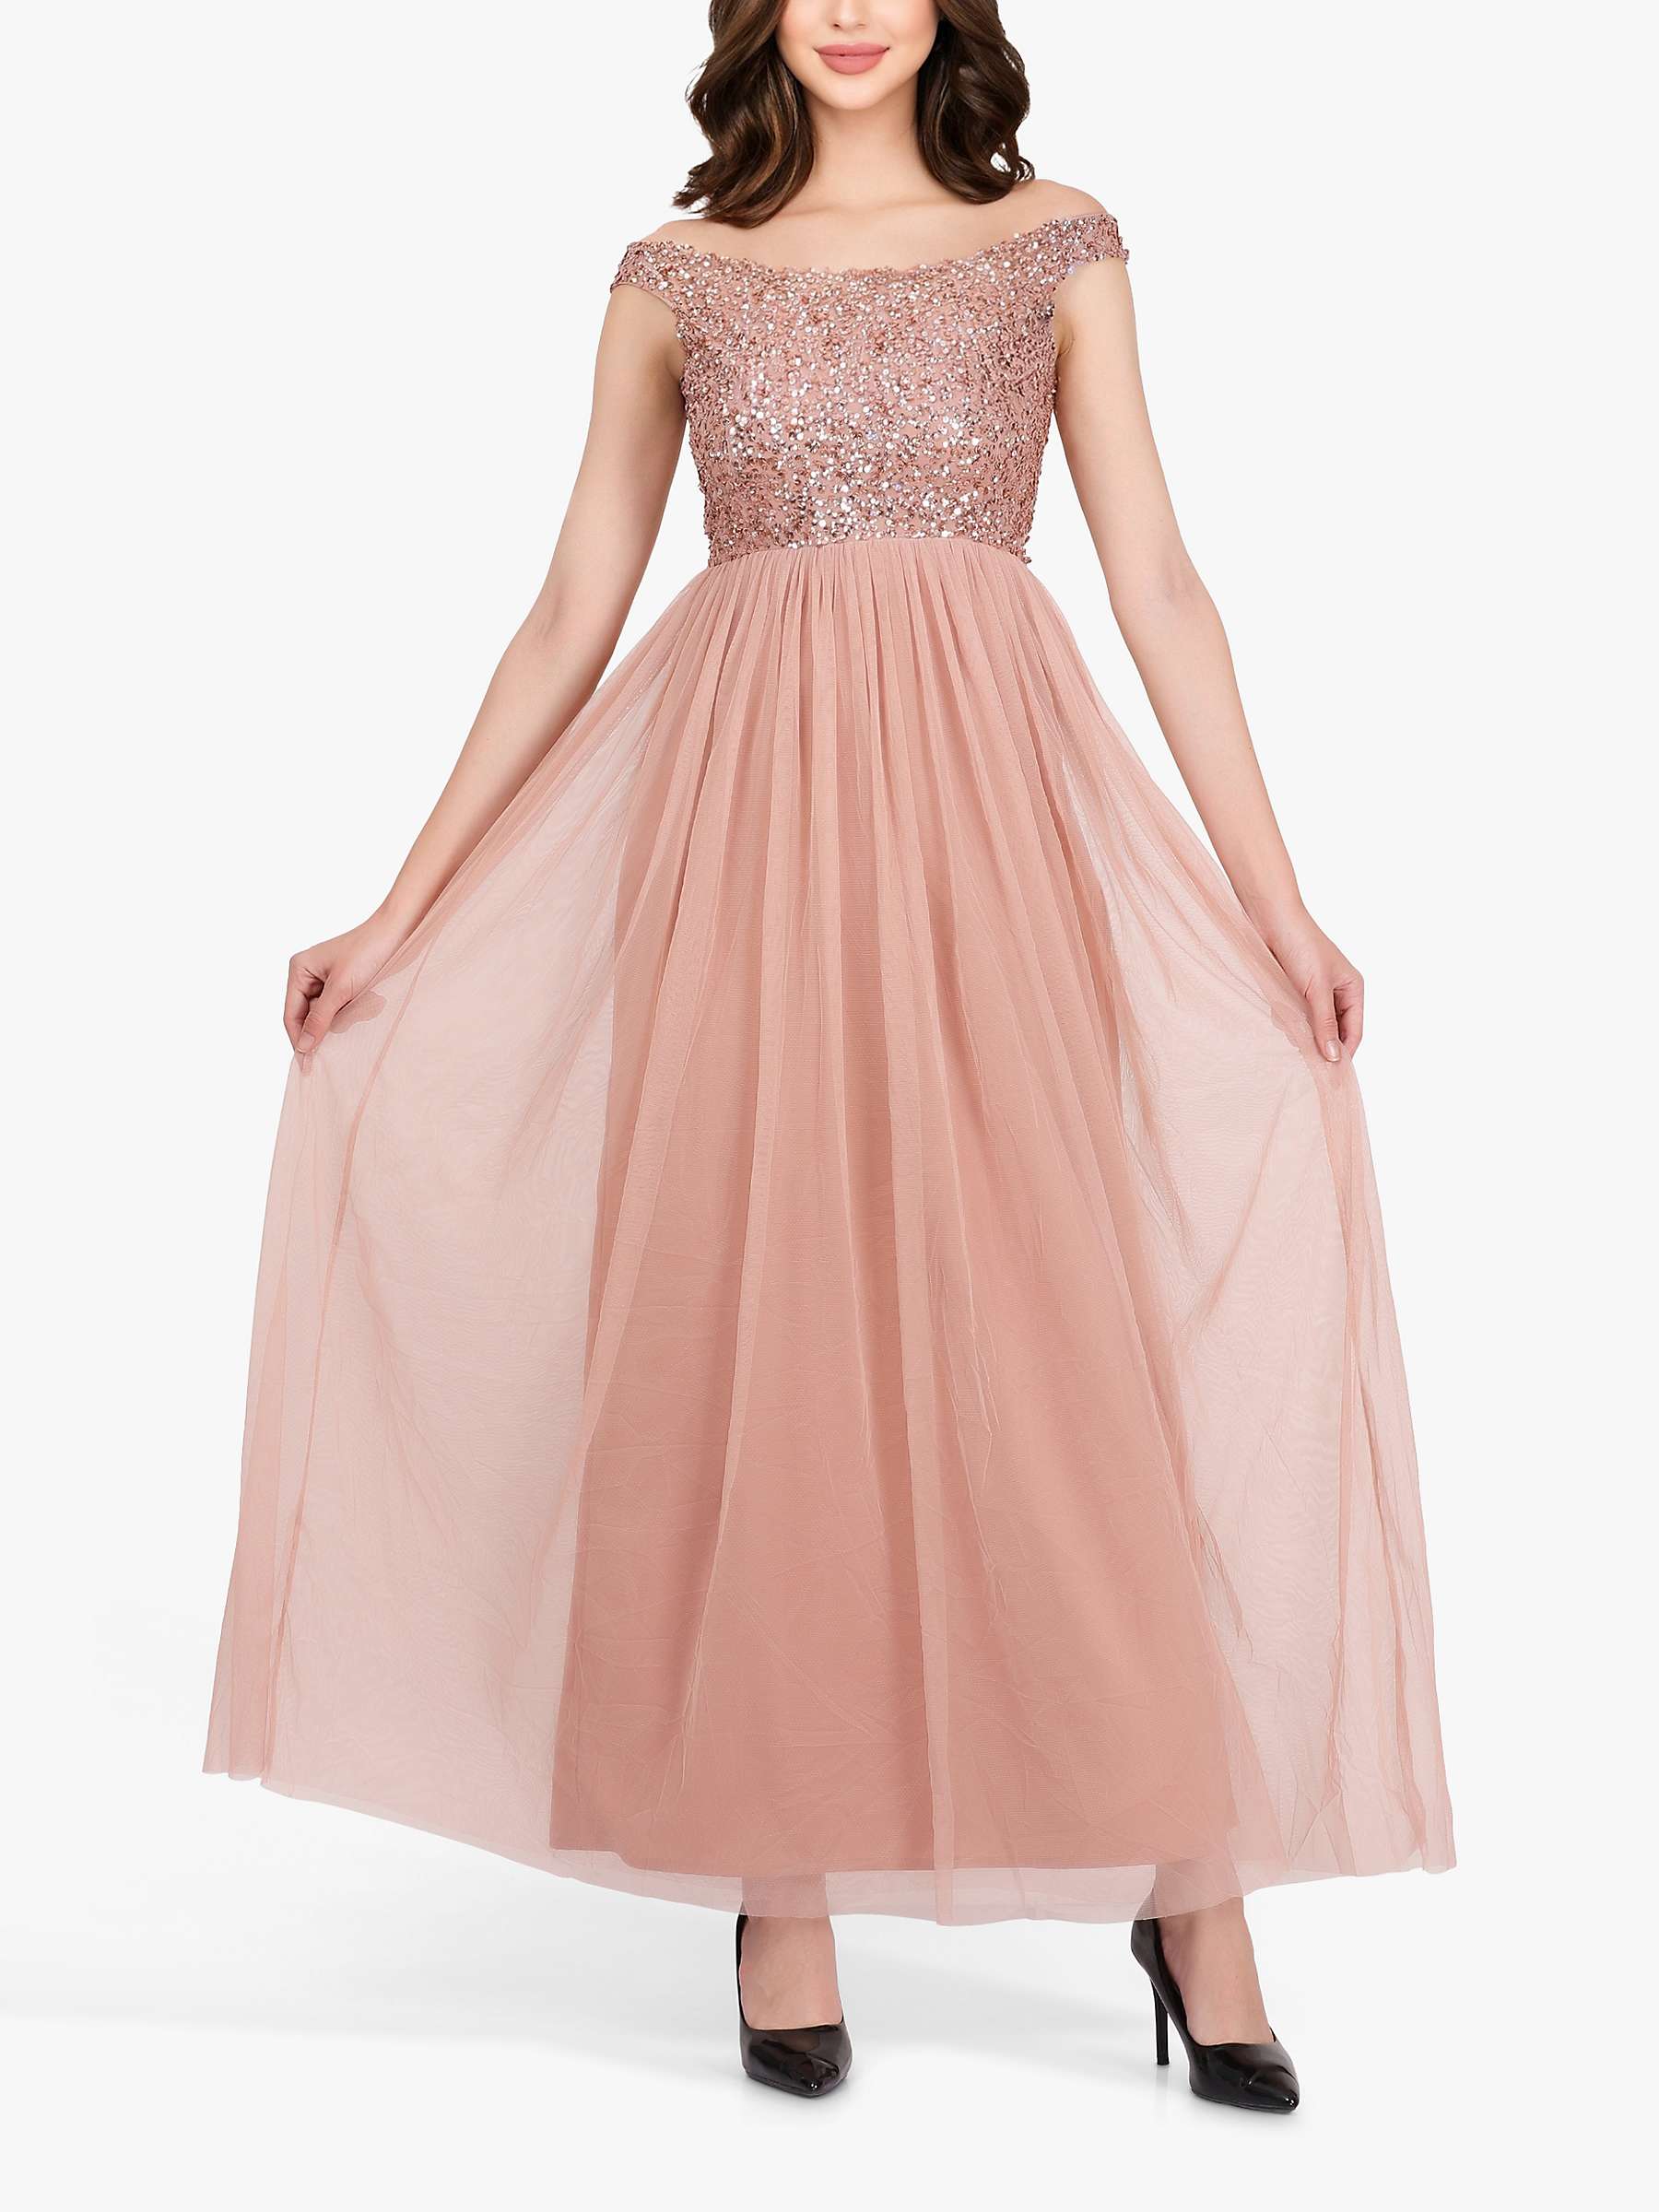 Buy Lace & Beads Nina Embellished Maxi Dress,Taupe Online at johnlewis.com